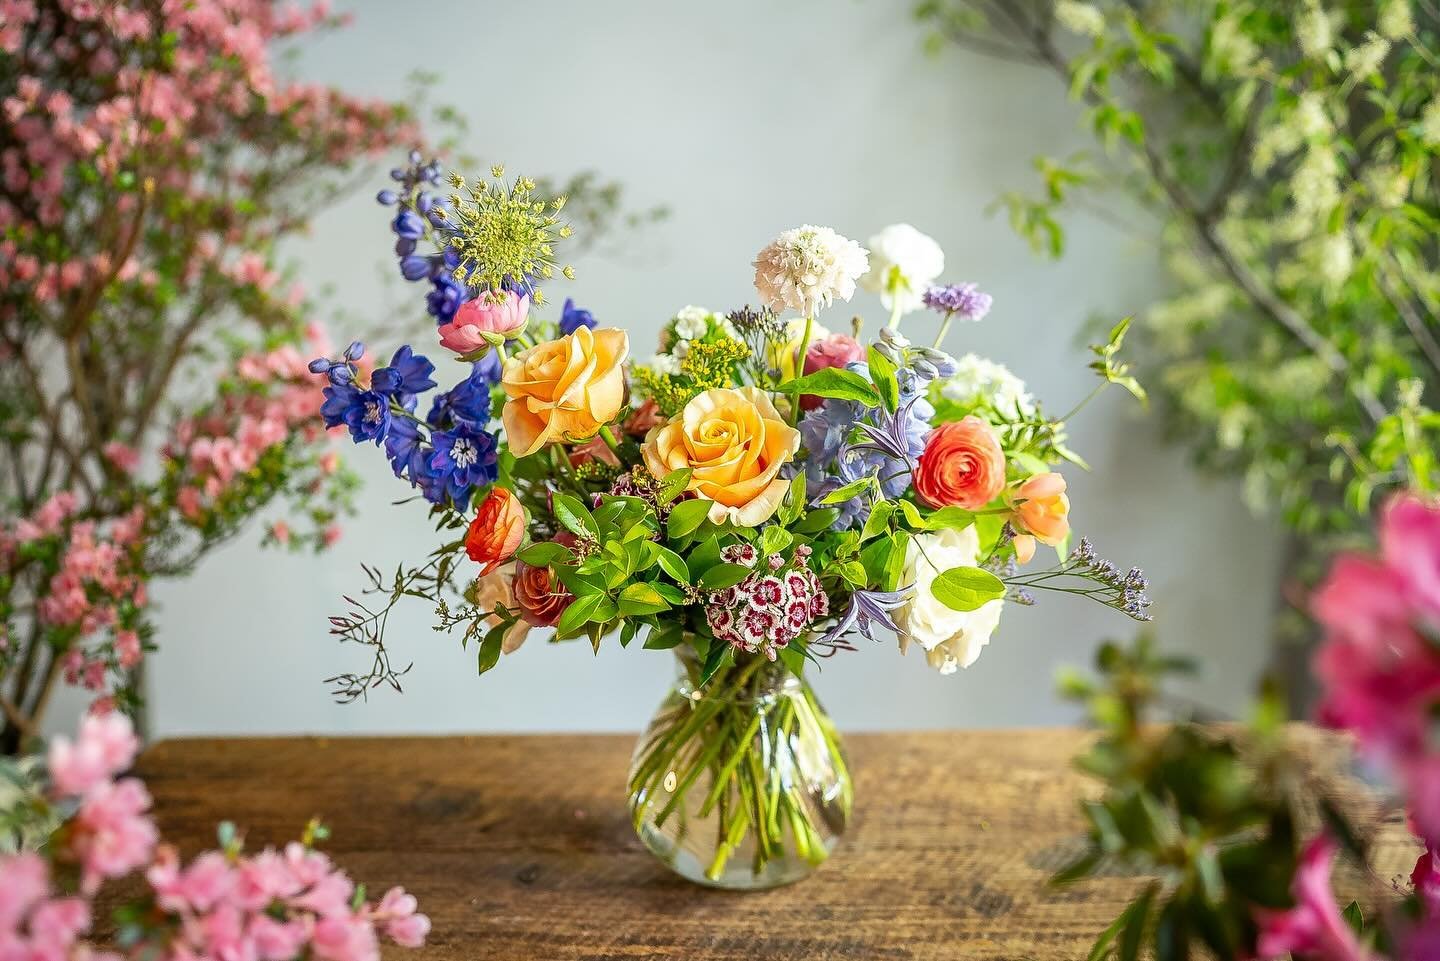 Color = Joy 🥰 

#flowers #flowerstagram #flowershop #floraldesign #florist #color